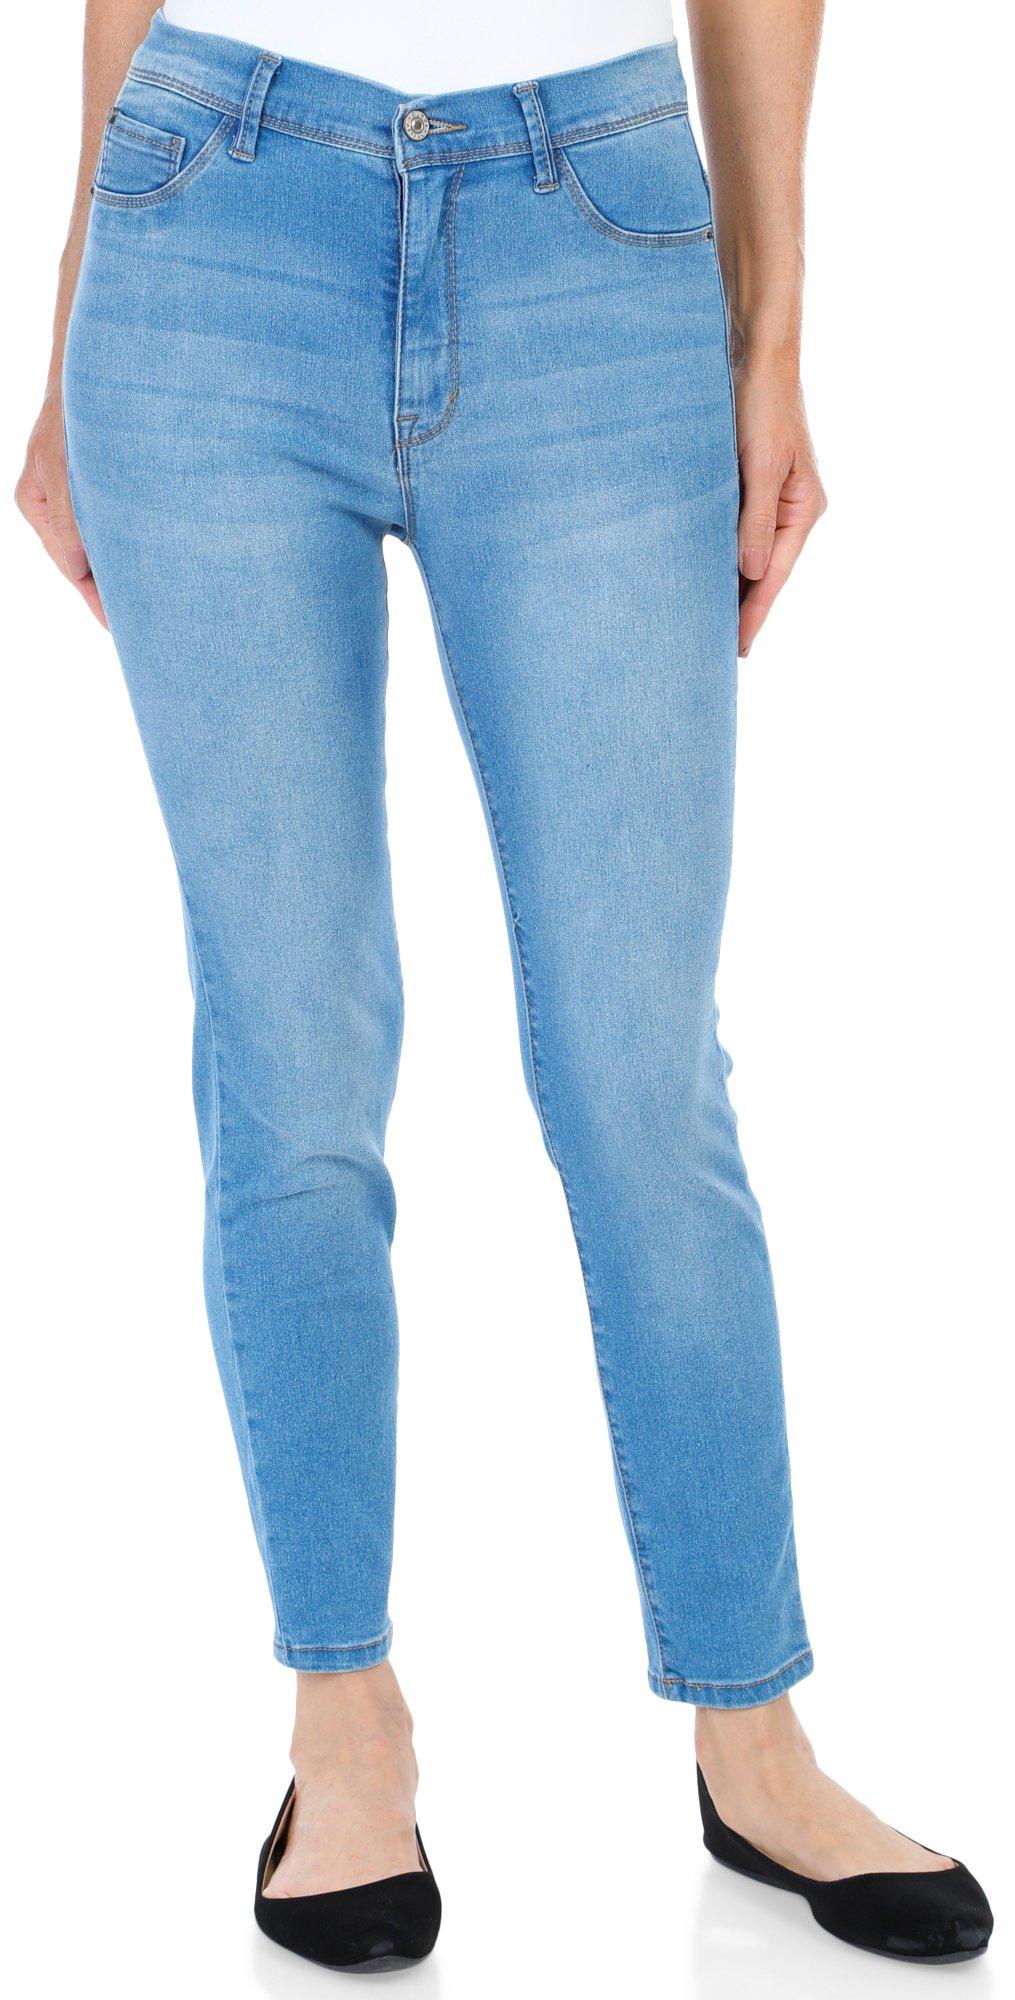 Wax Jeans Womens/Juniors Luscious Basic Bootcut/Straight Stretch Blue/Black  Denim Jeans Pants